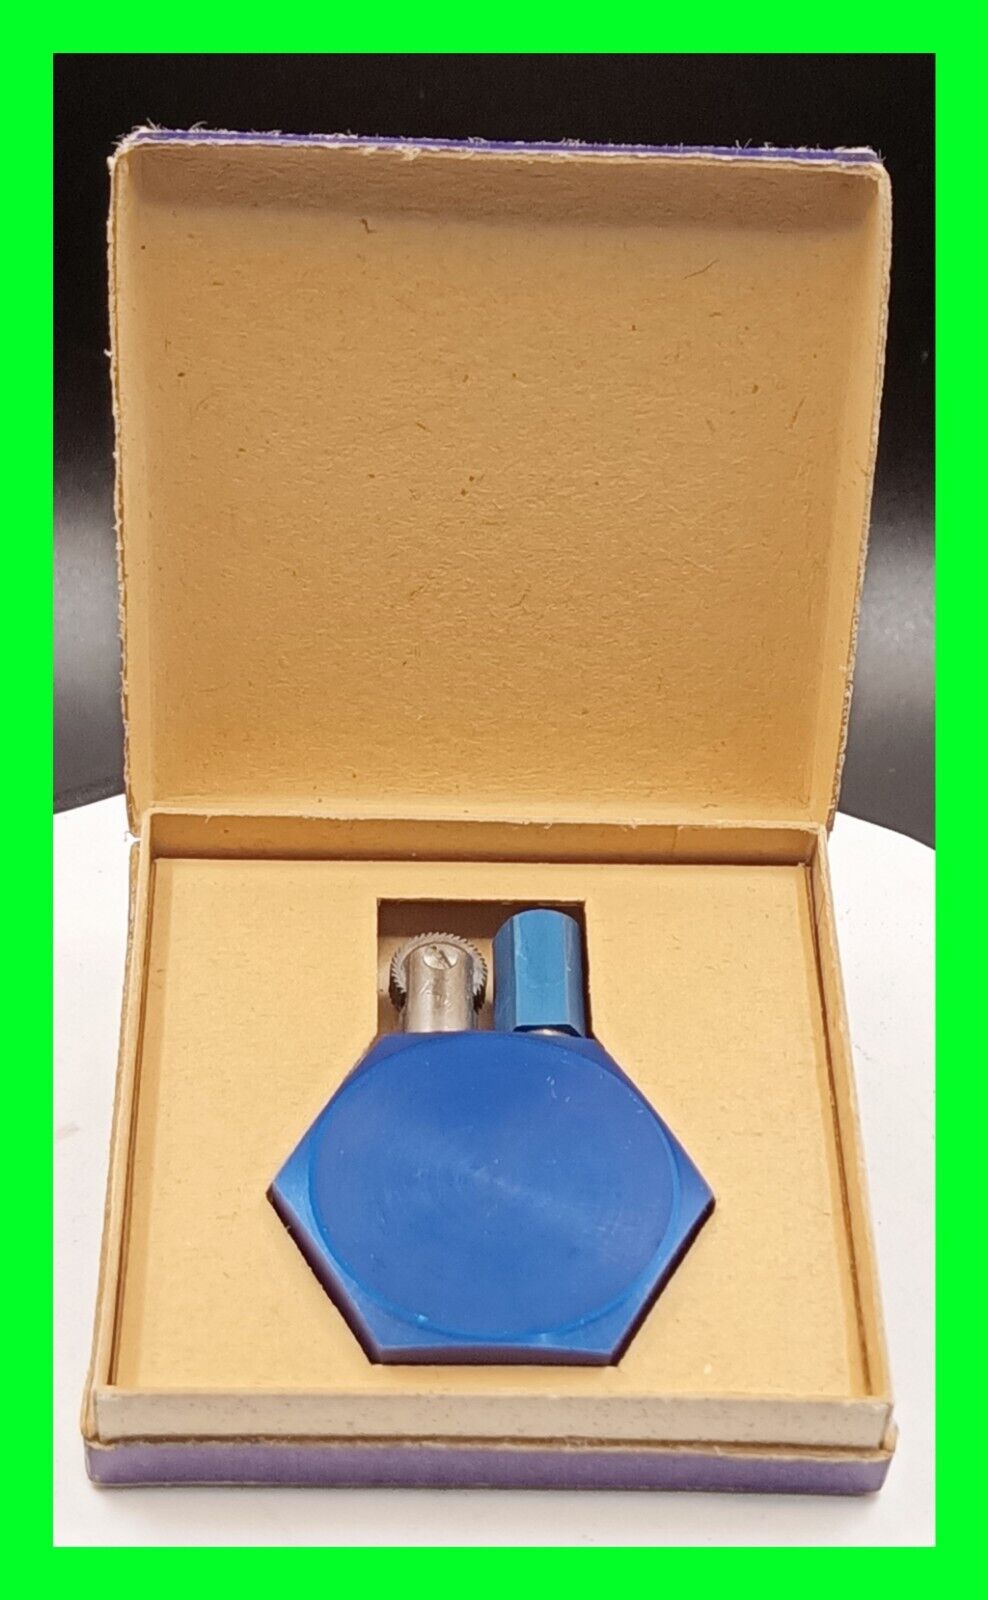 Unique Vintage Blue Hexagon Petrol Cigarette Lighter - In Original Box - UNFIRED